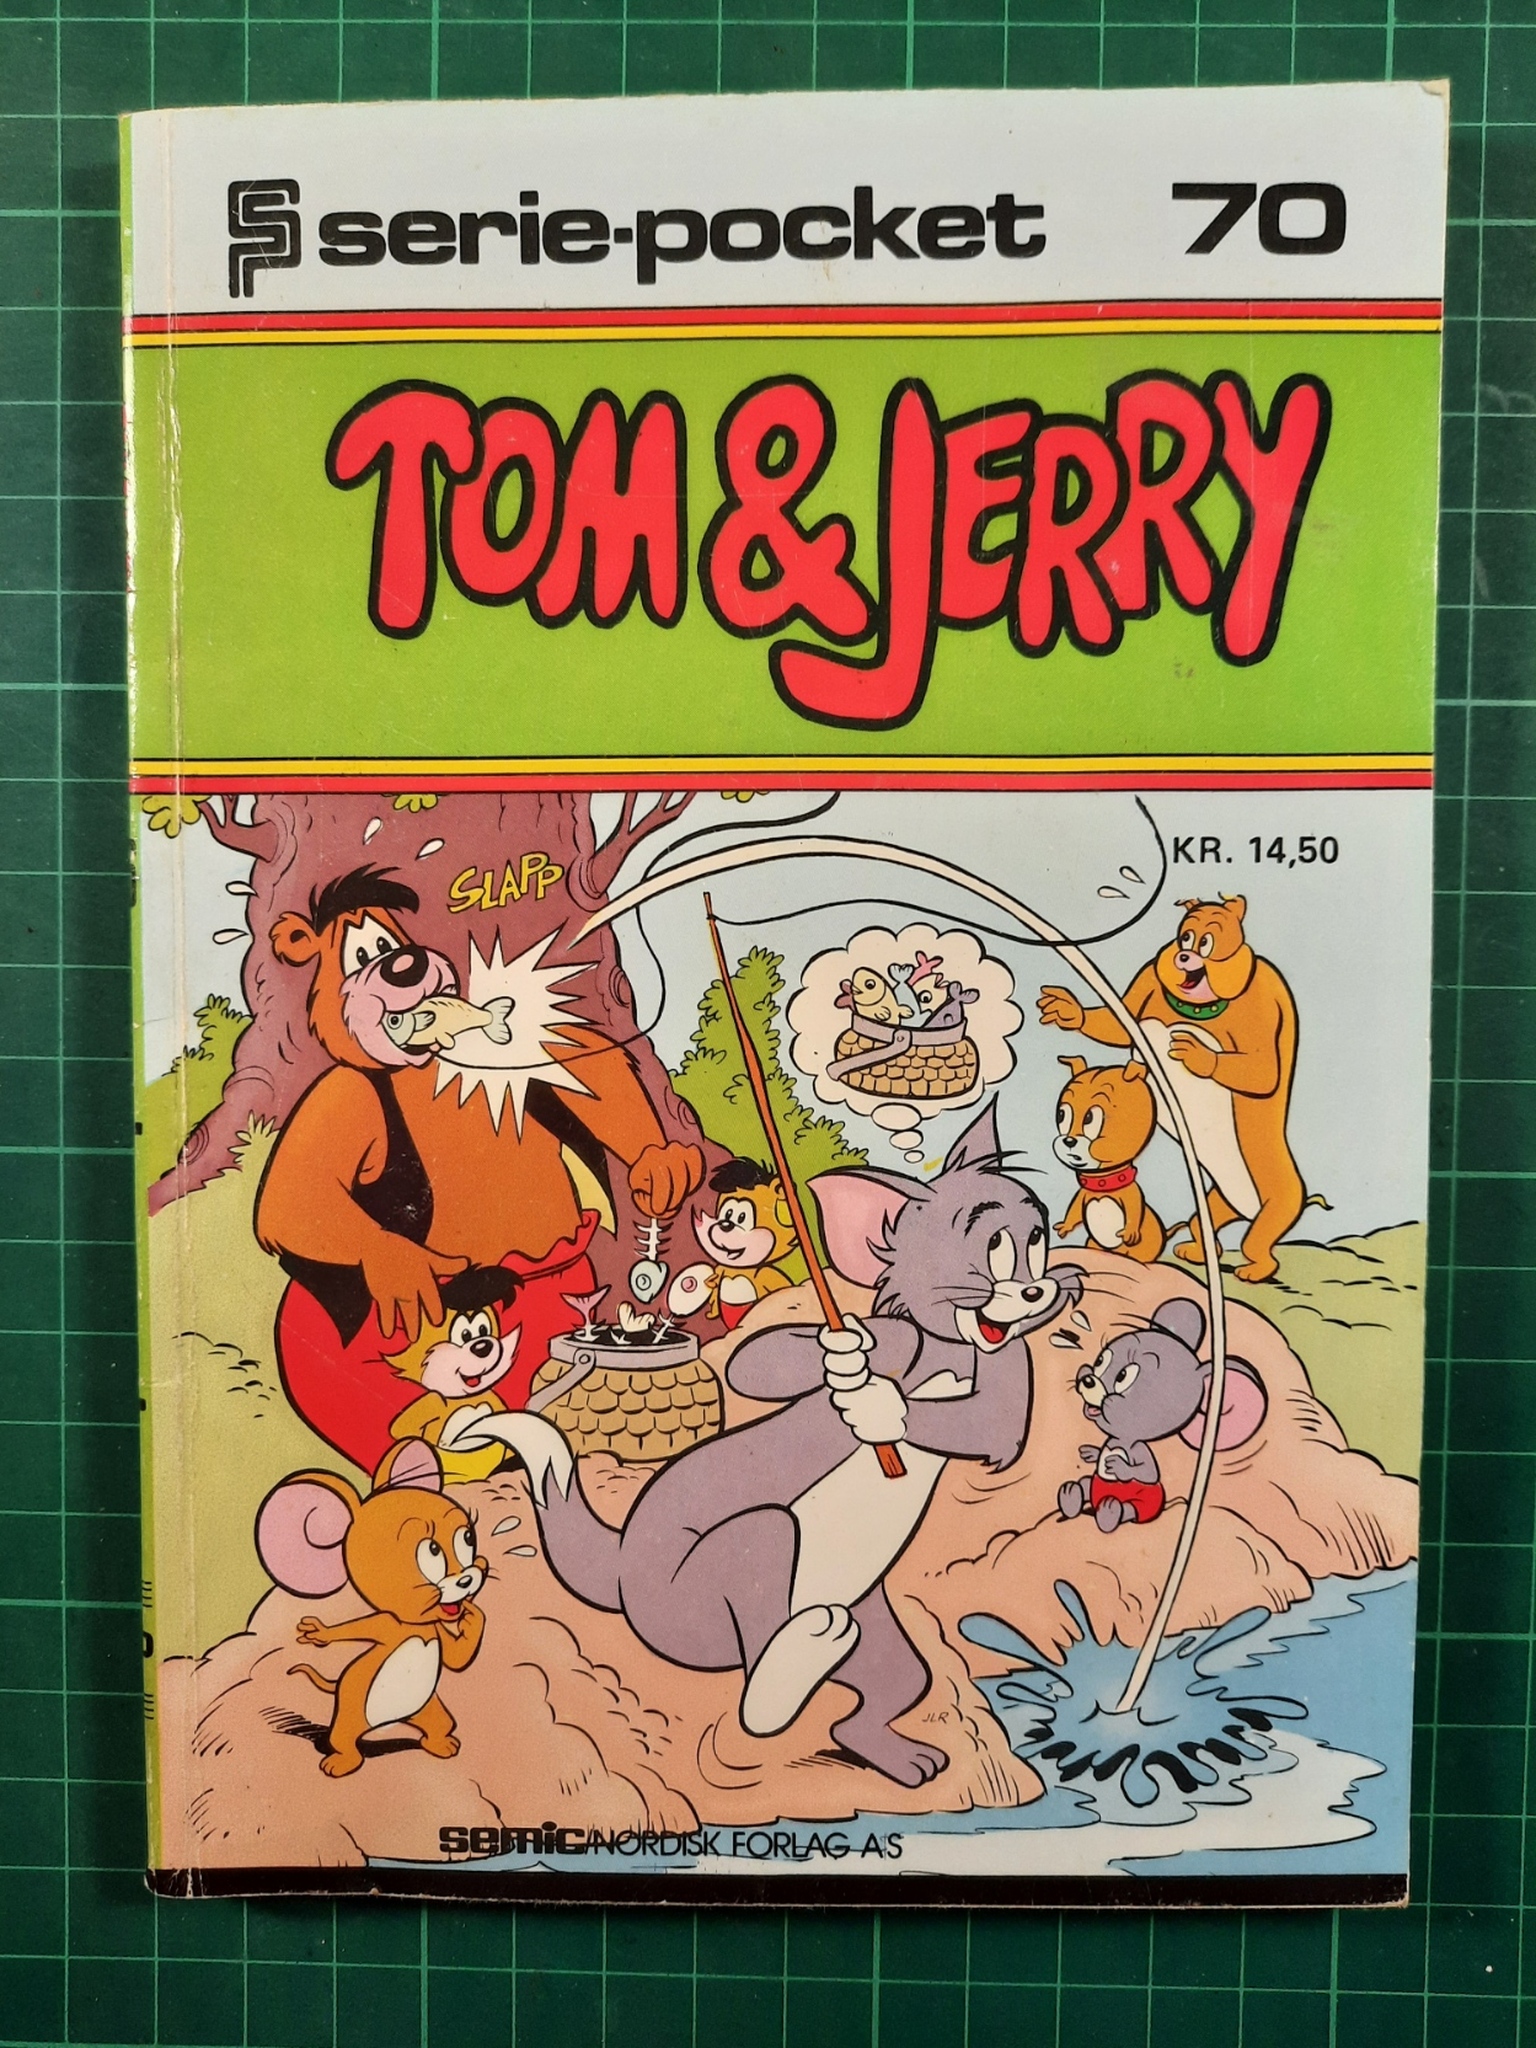 Serie-pocket 070 : Tom & Jerry